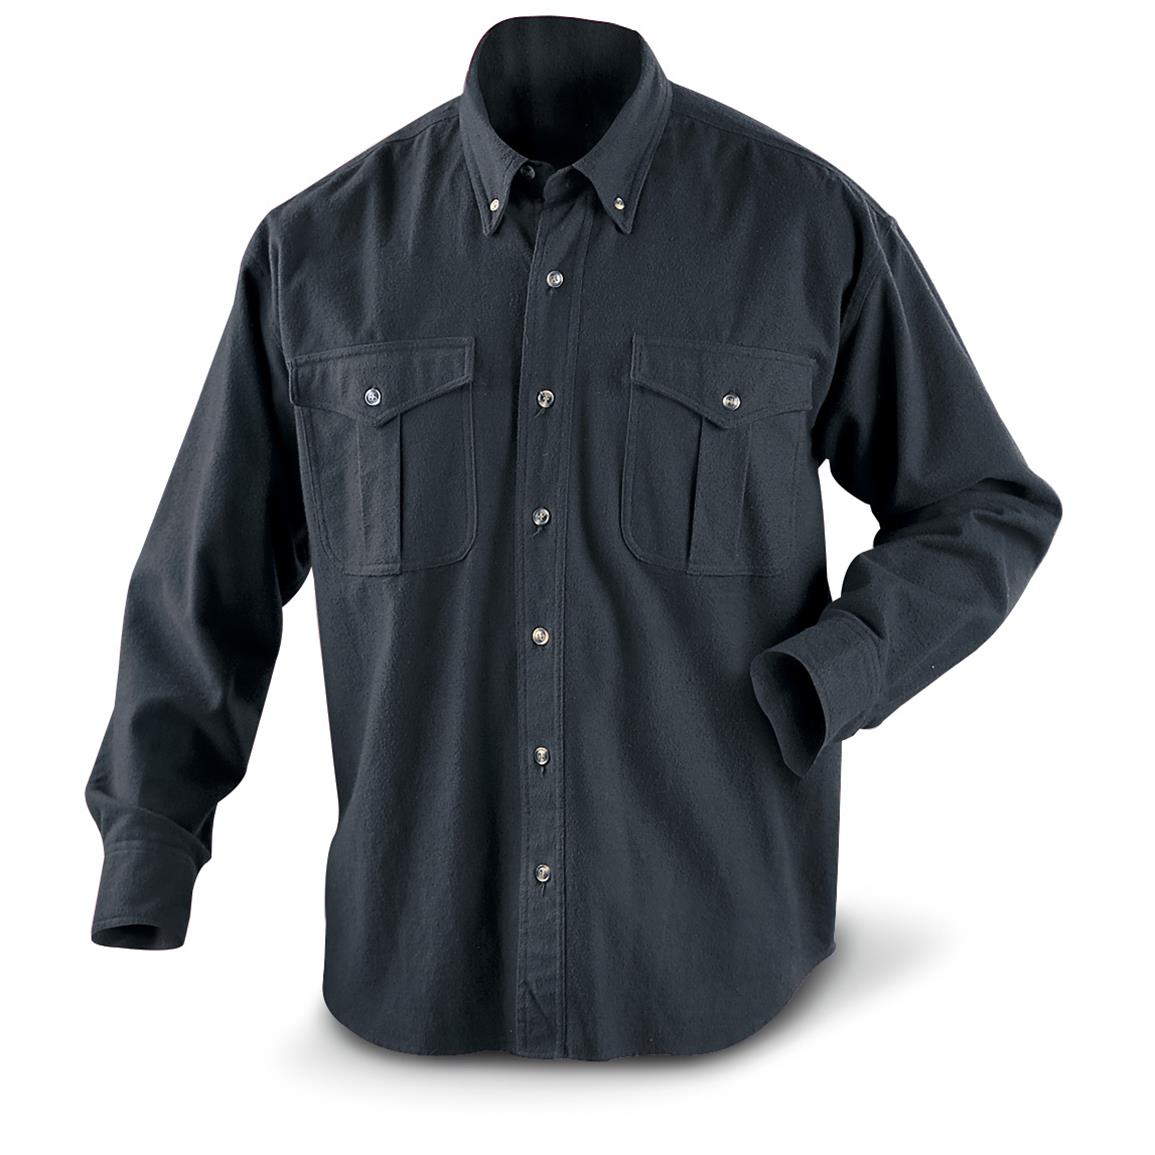 Guide Gear Men's Cotton Chamois Shirt - 221616, Shirts at Sportsman's Guide